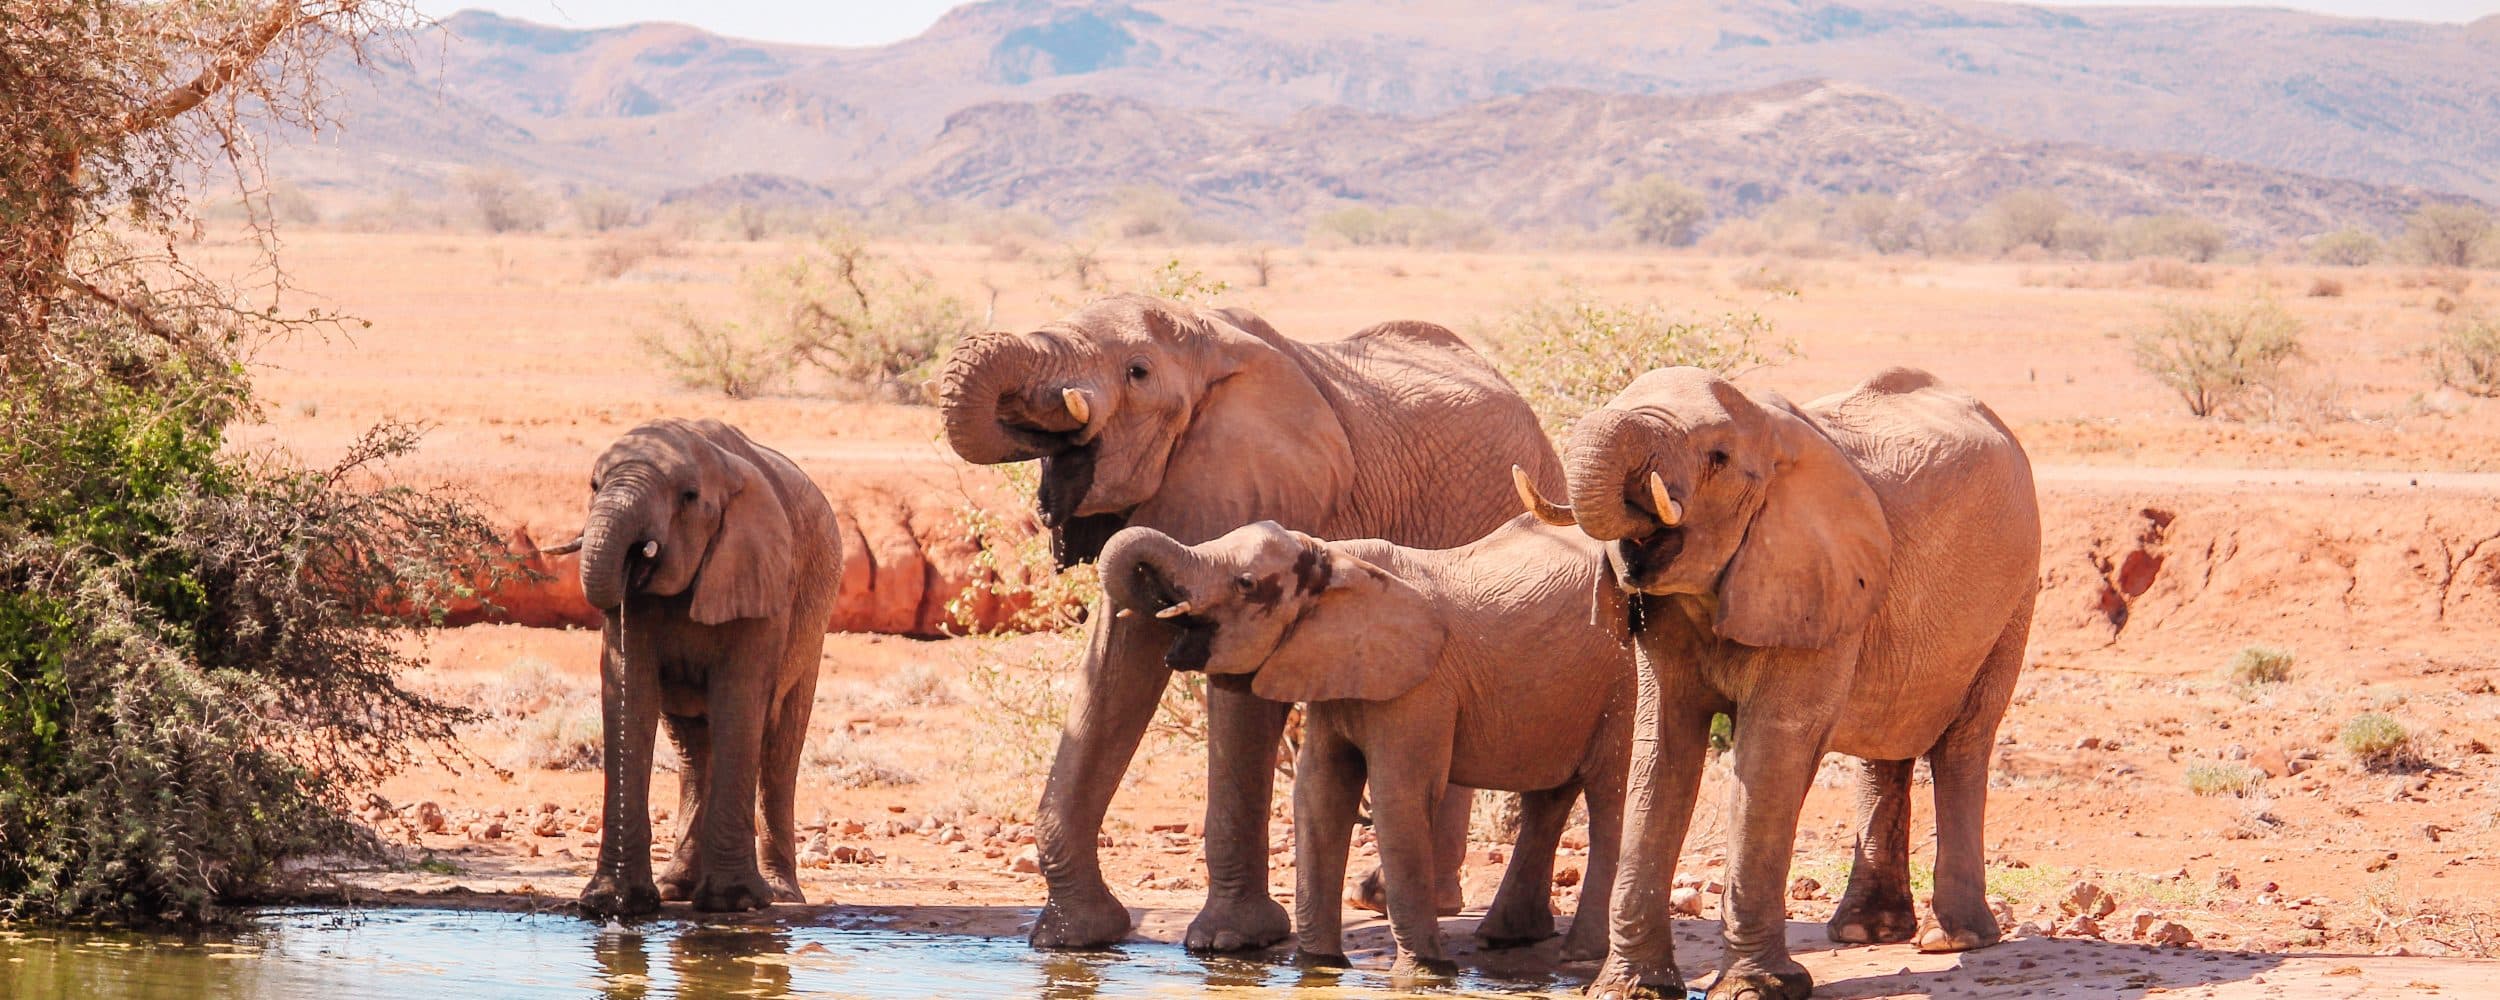 Elefantes del desierto de Namibia